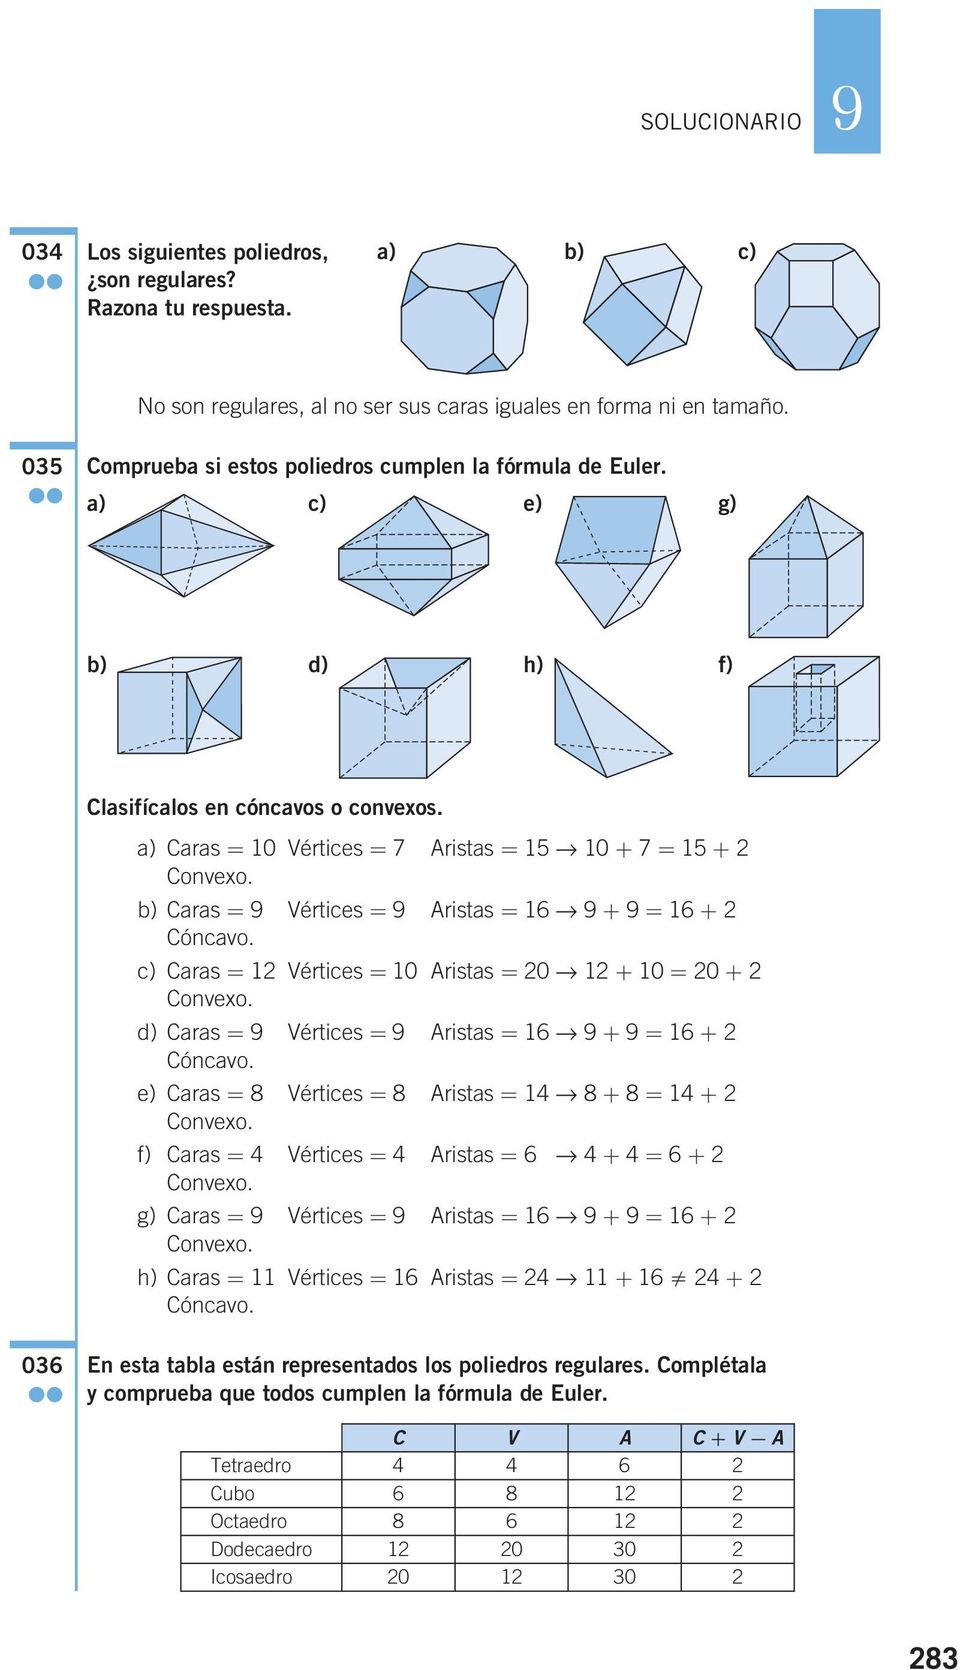 b) Caras = 9 Vértices = 9 Aristas = 6 9 + 9 = 6 + Cóncavo. c) Caras = Vértices = 0 Aristas = 0 + 0 = 0 + Convexo. d) Caras = 9 Vértices = 9 Aristas = 6 9 + 9 = 6 + Cóncavo.